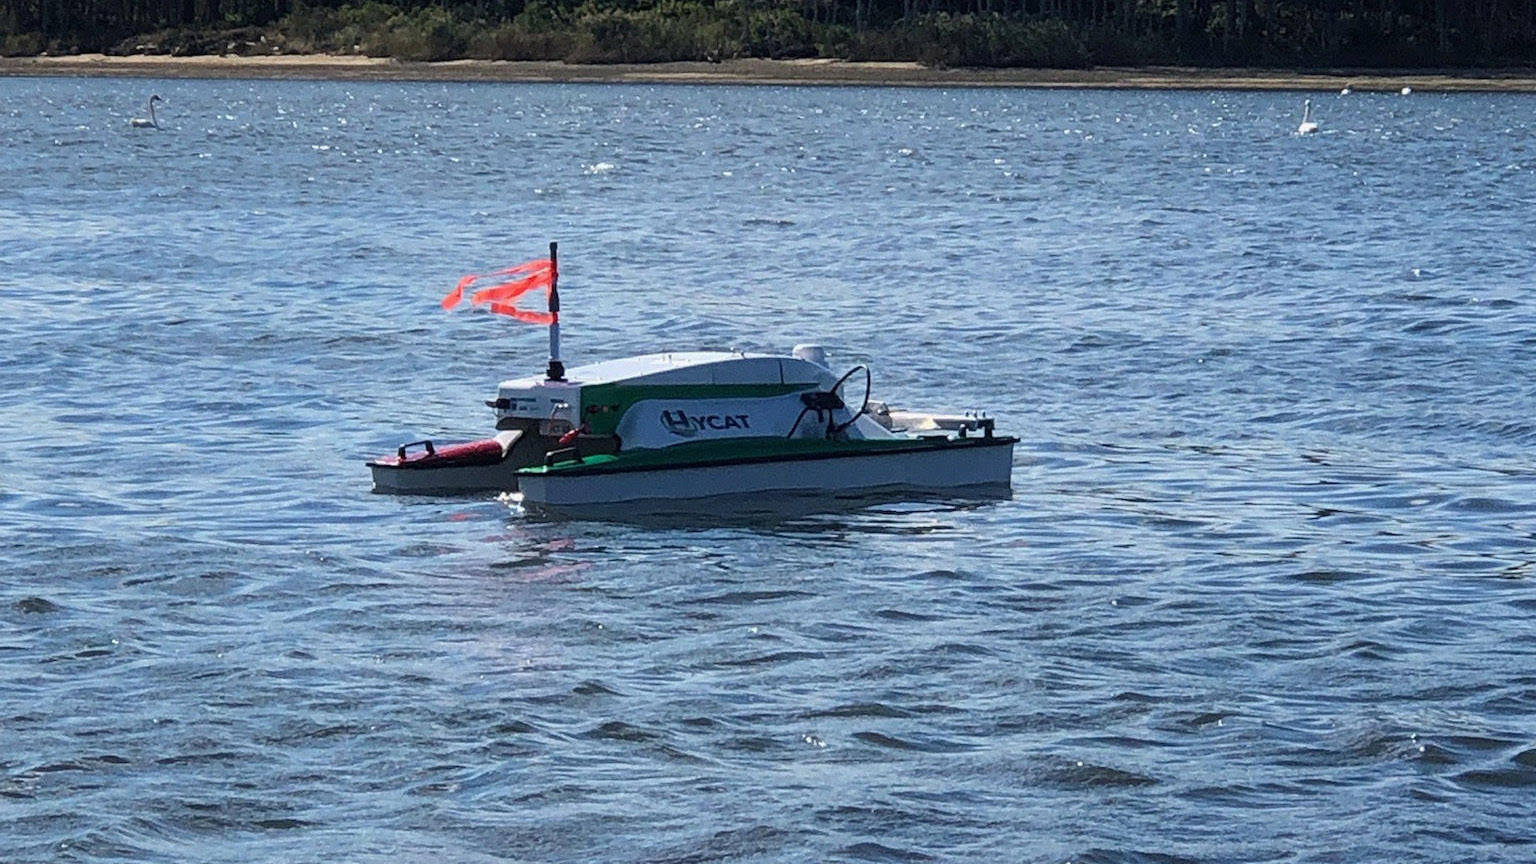 Hycraft boat